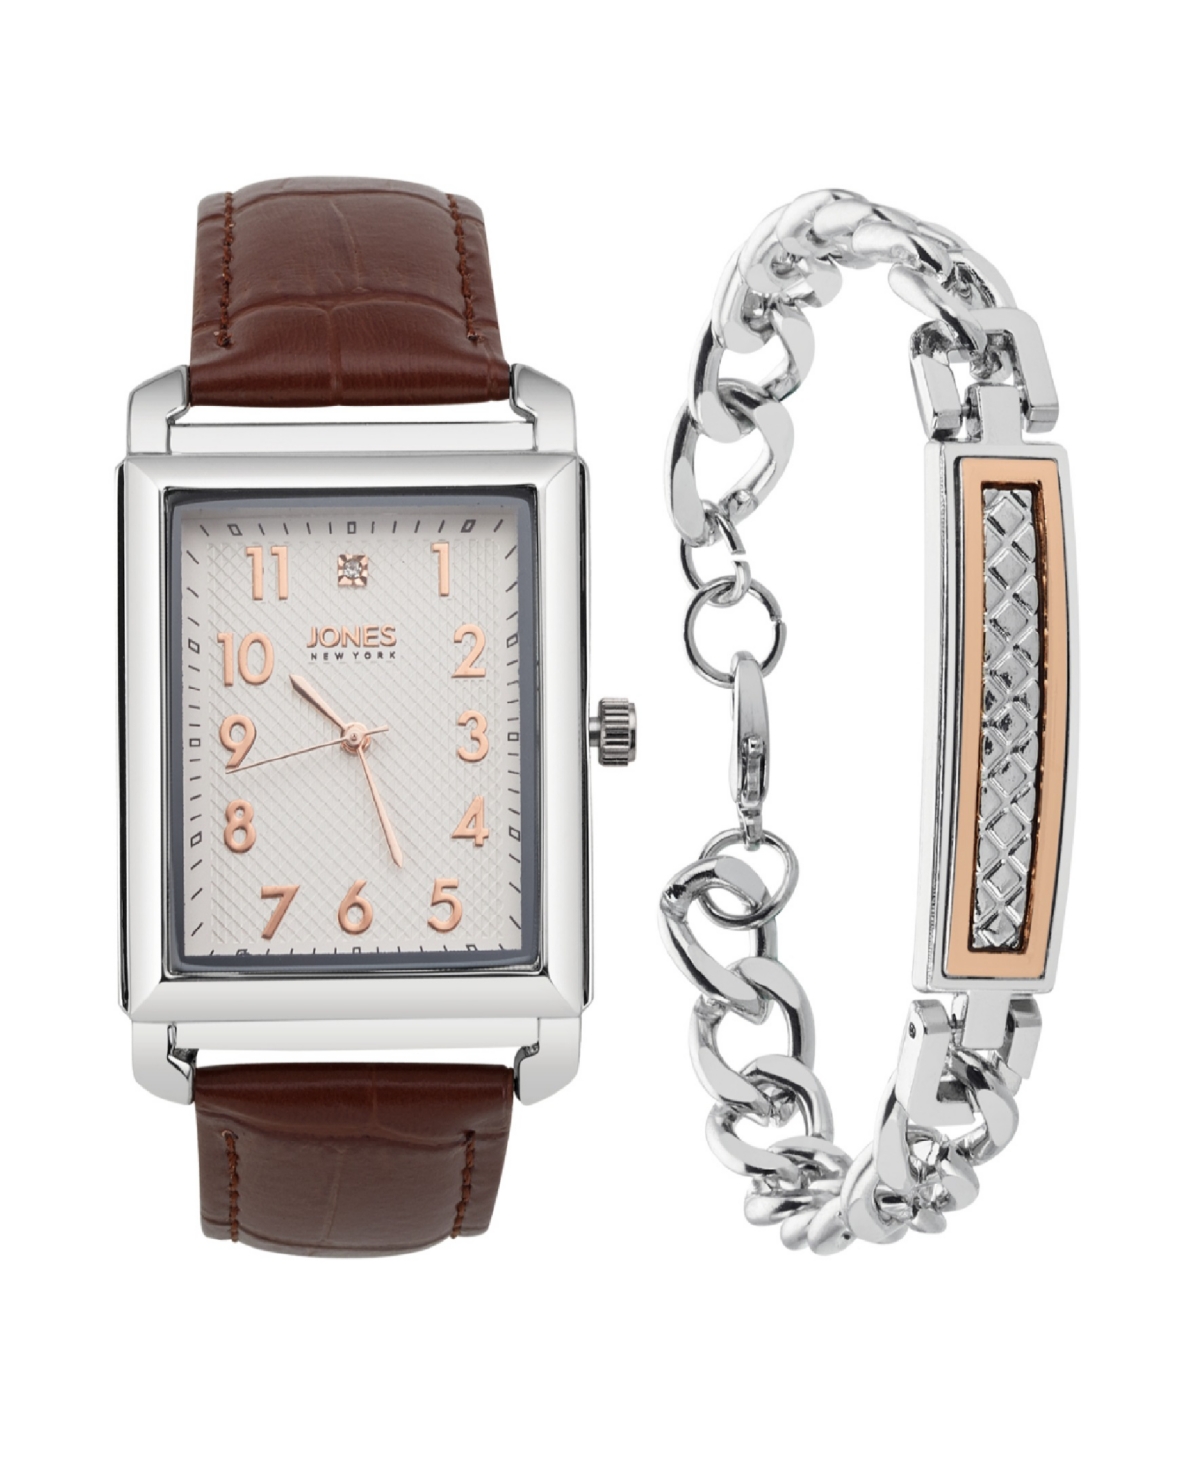 Men's Analog Brown Croc Leather Strap Watch 33mm Bracelet Gift Set - Silver, Brown